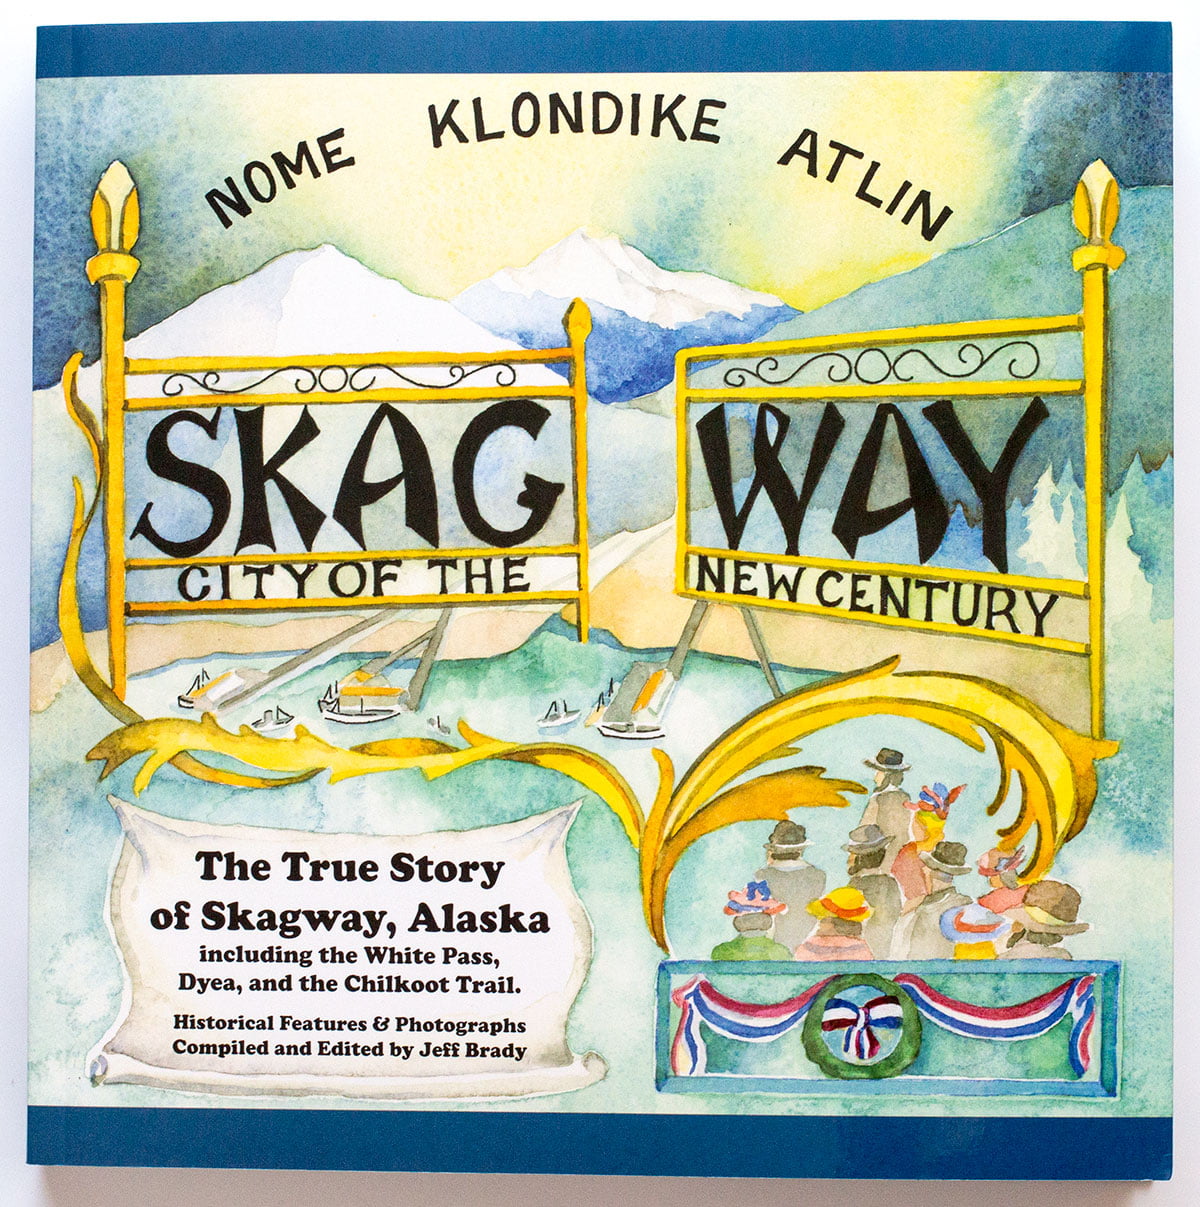 Skagway City of the New Century